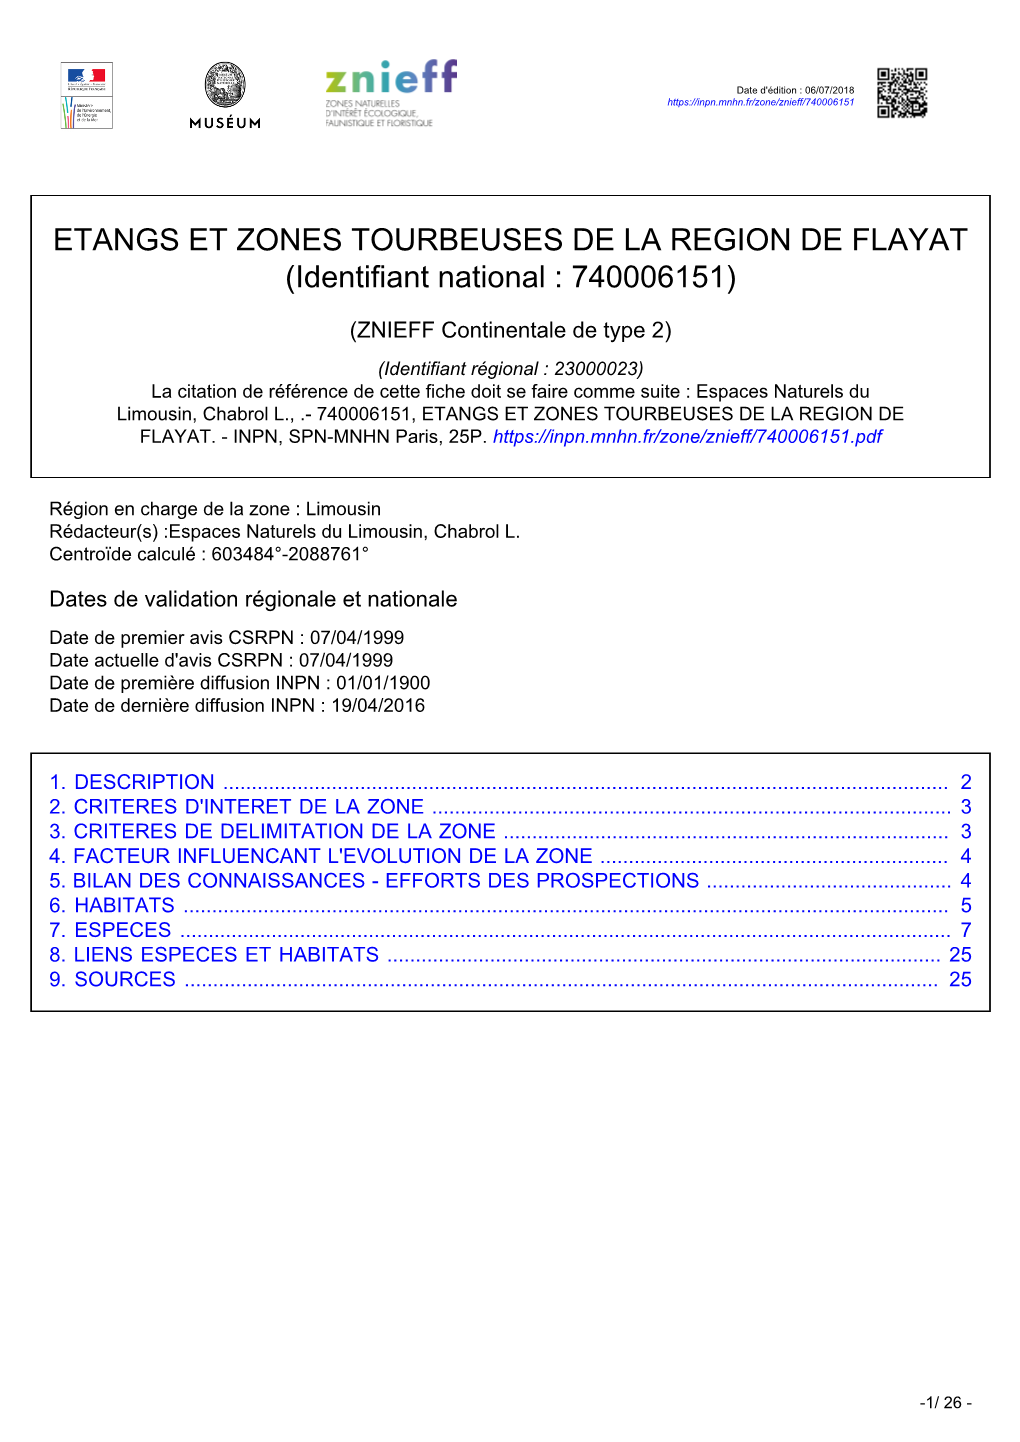 ETANGS ET ZONES TOURBEUSES DE LA REGION DE FLAYAT (Identifiant National : 740006151)